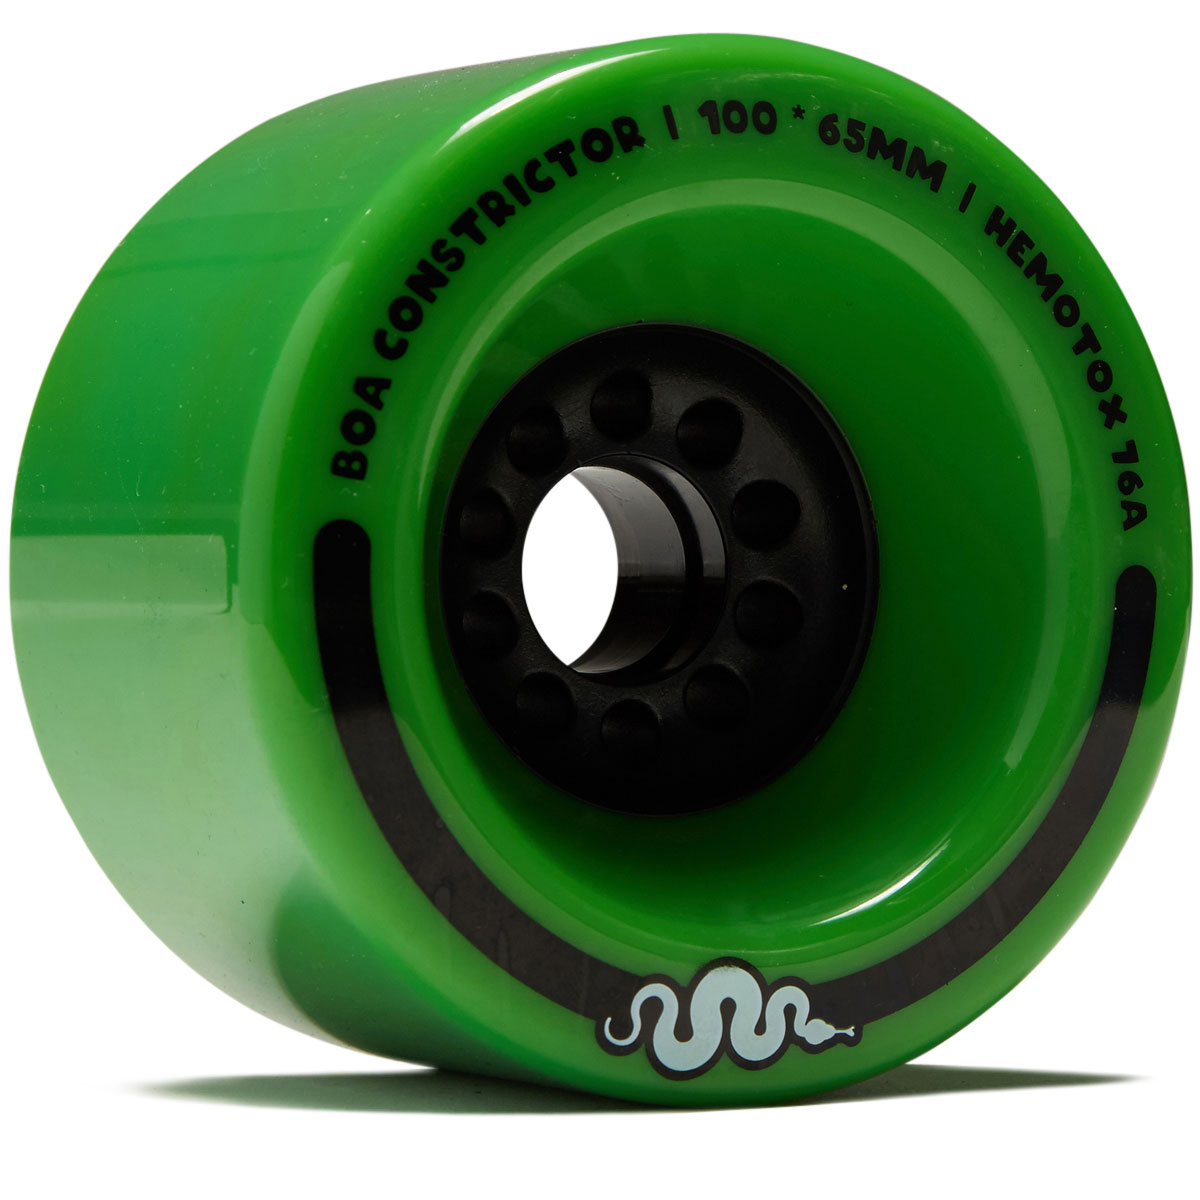 Boa Constrictor 76a Longboard Wheels - Jungle Green - 100mm image 1